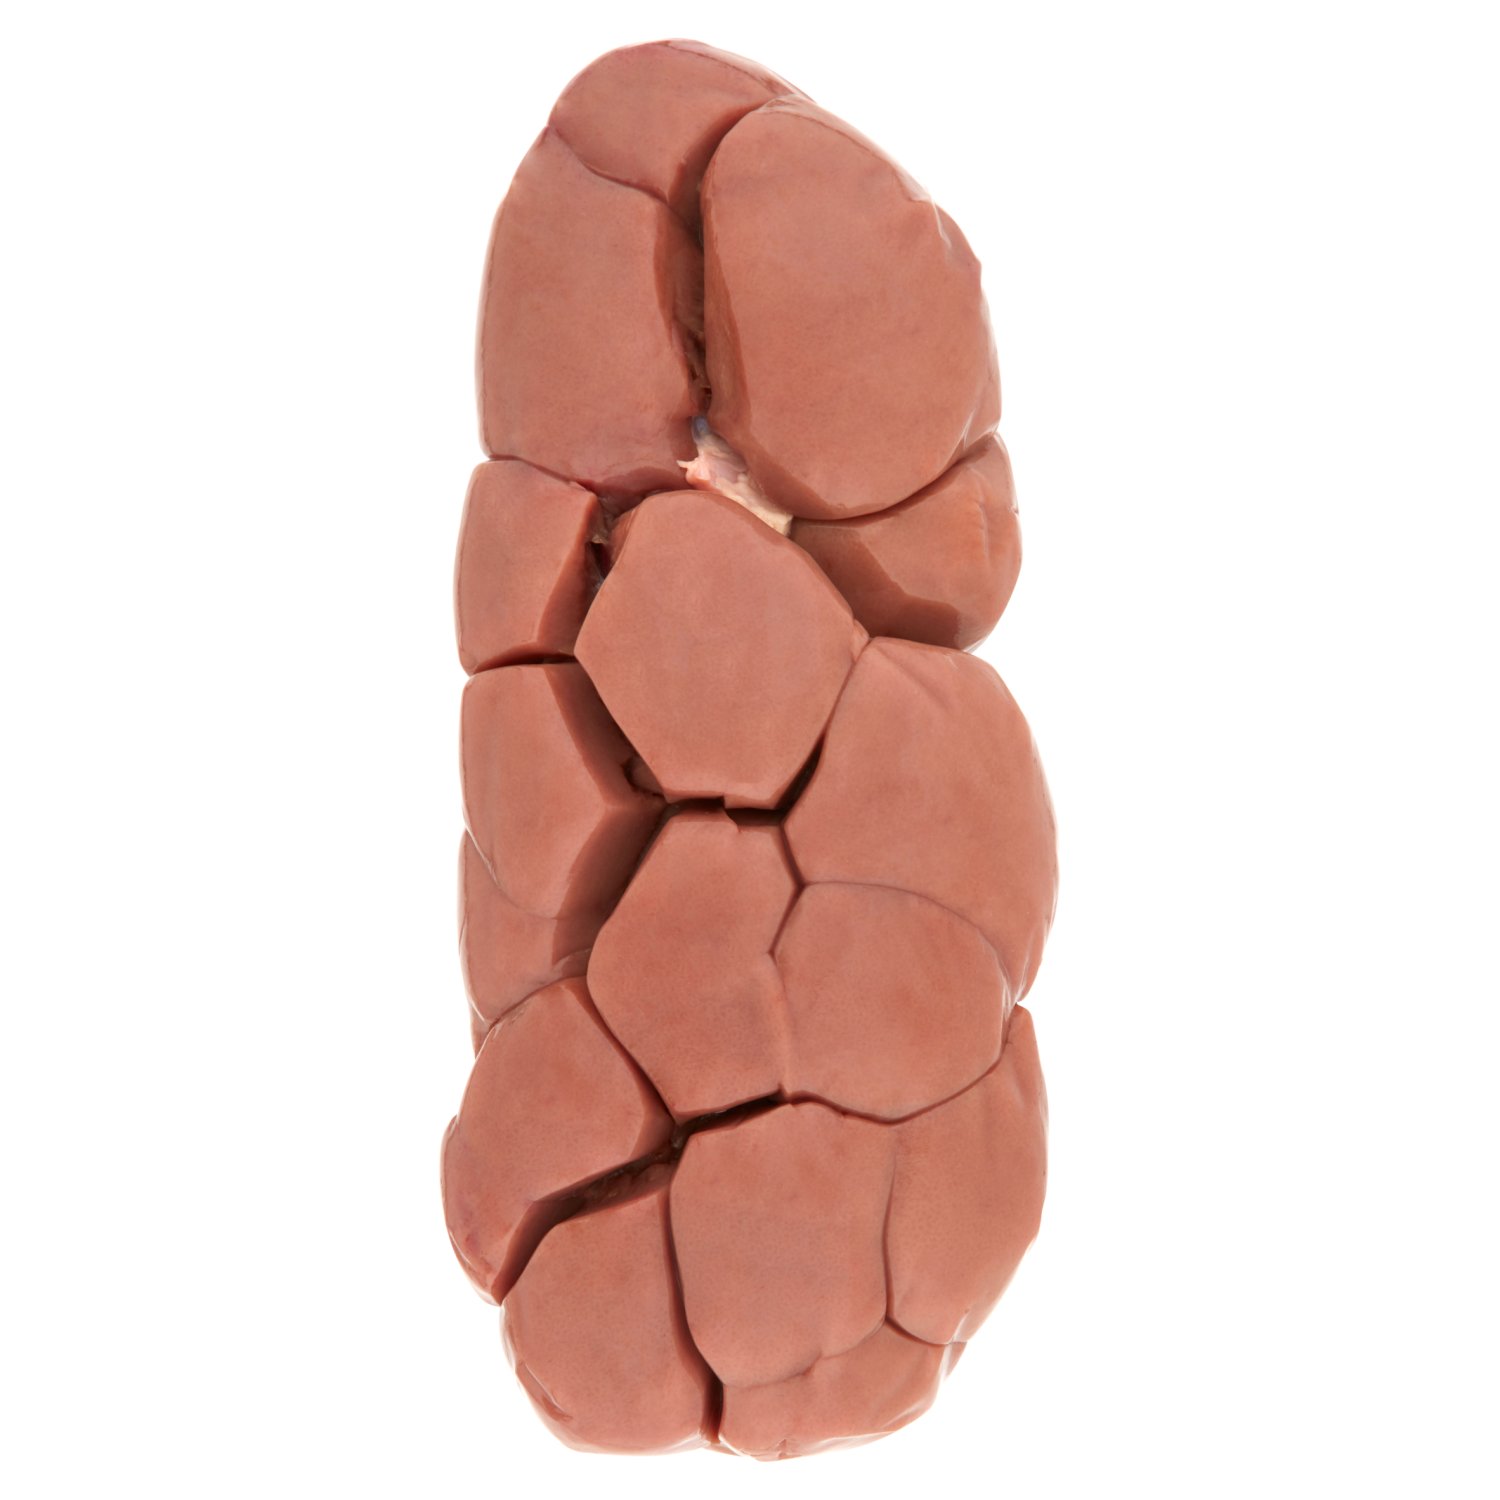 Beef Kidney (1 kg)